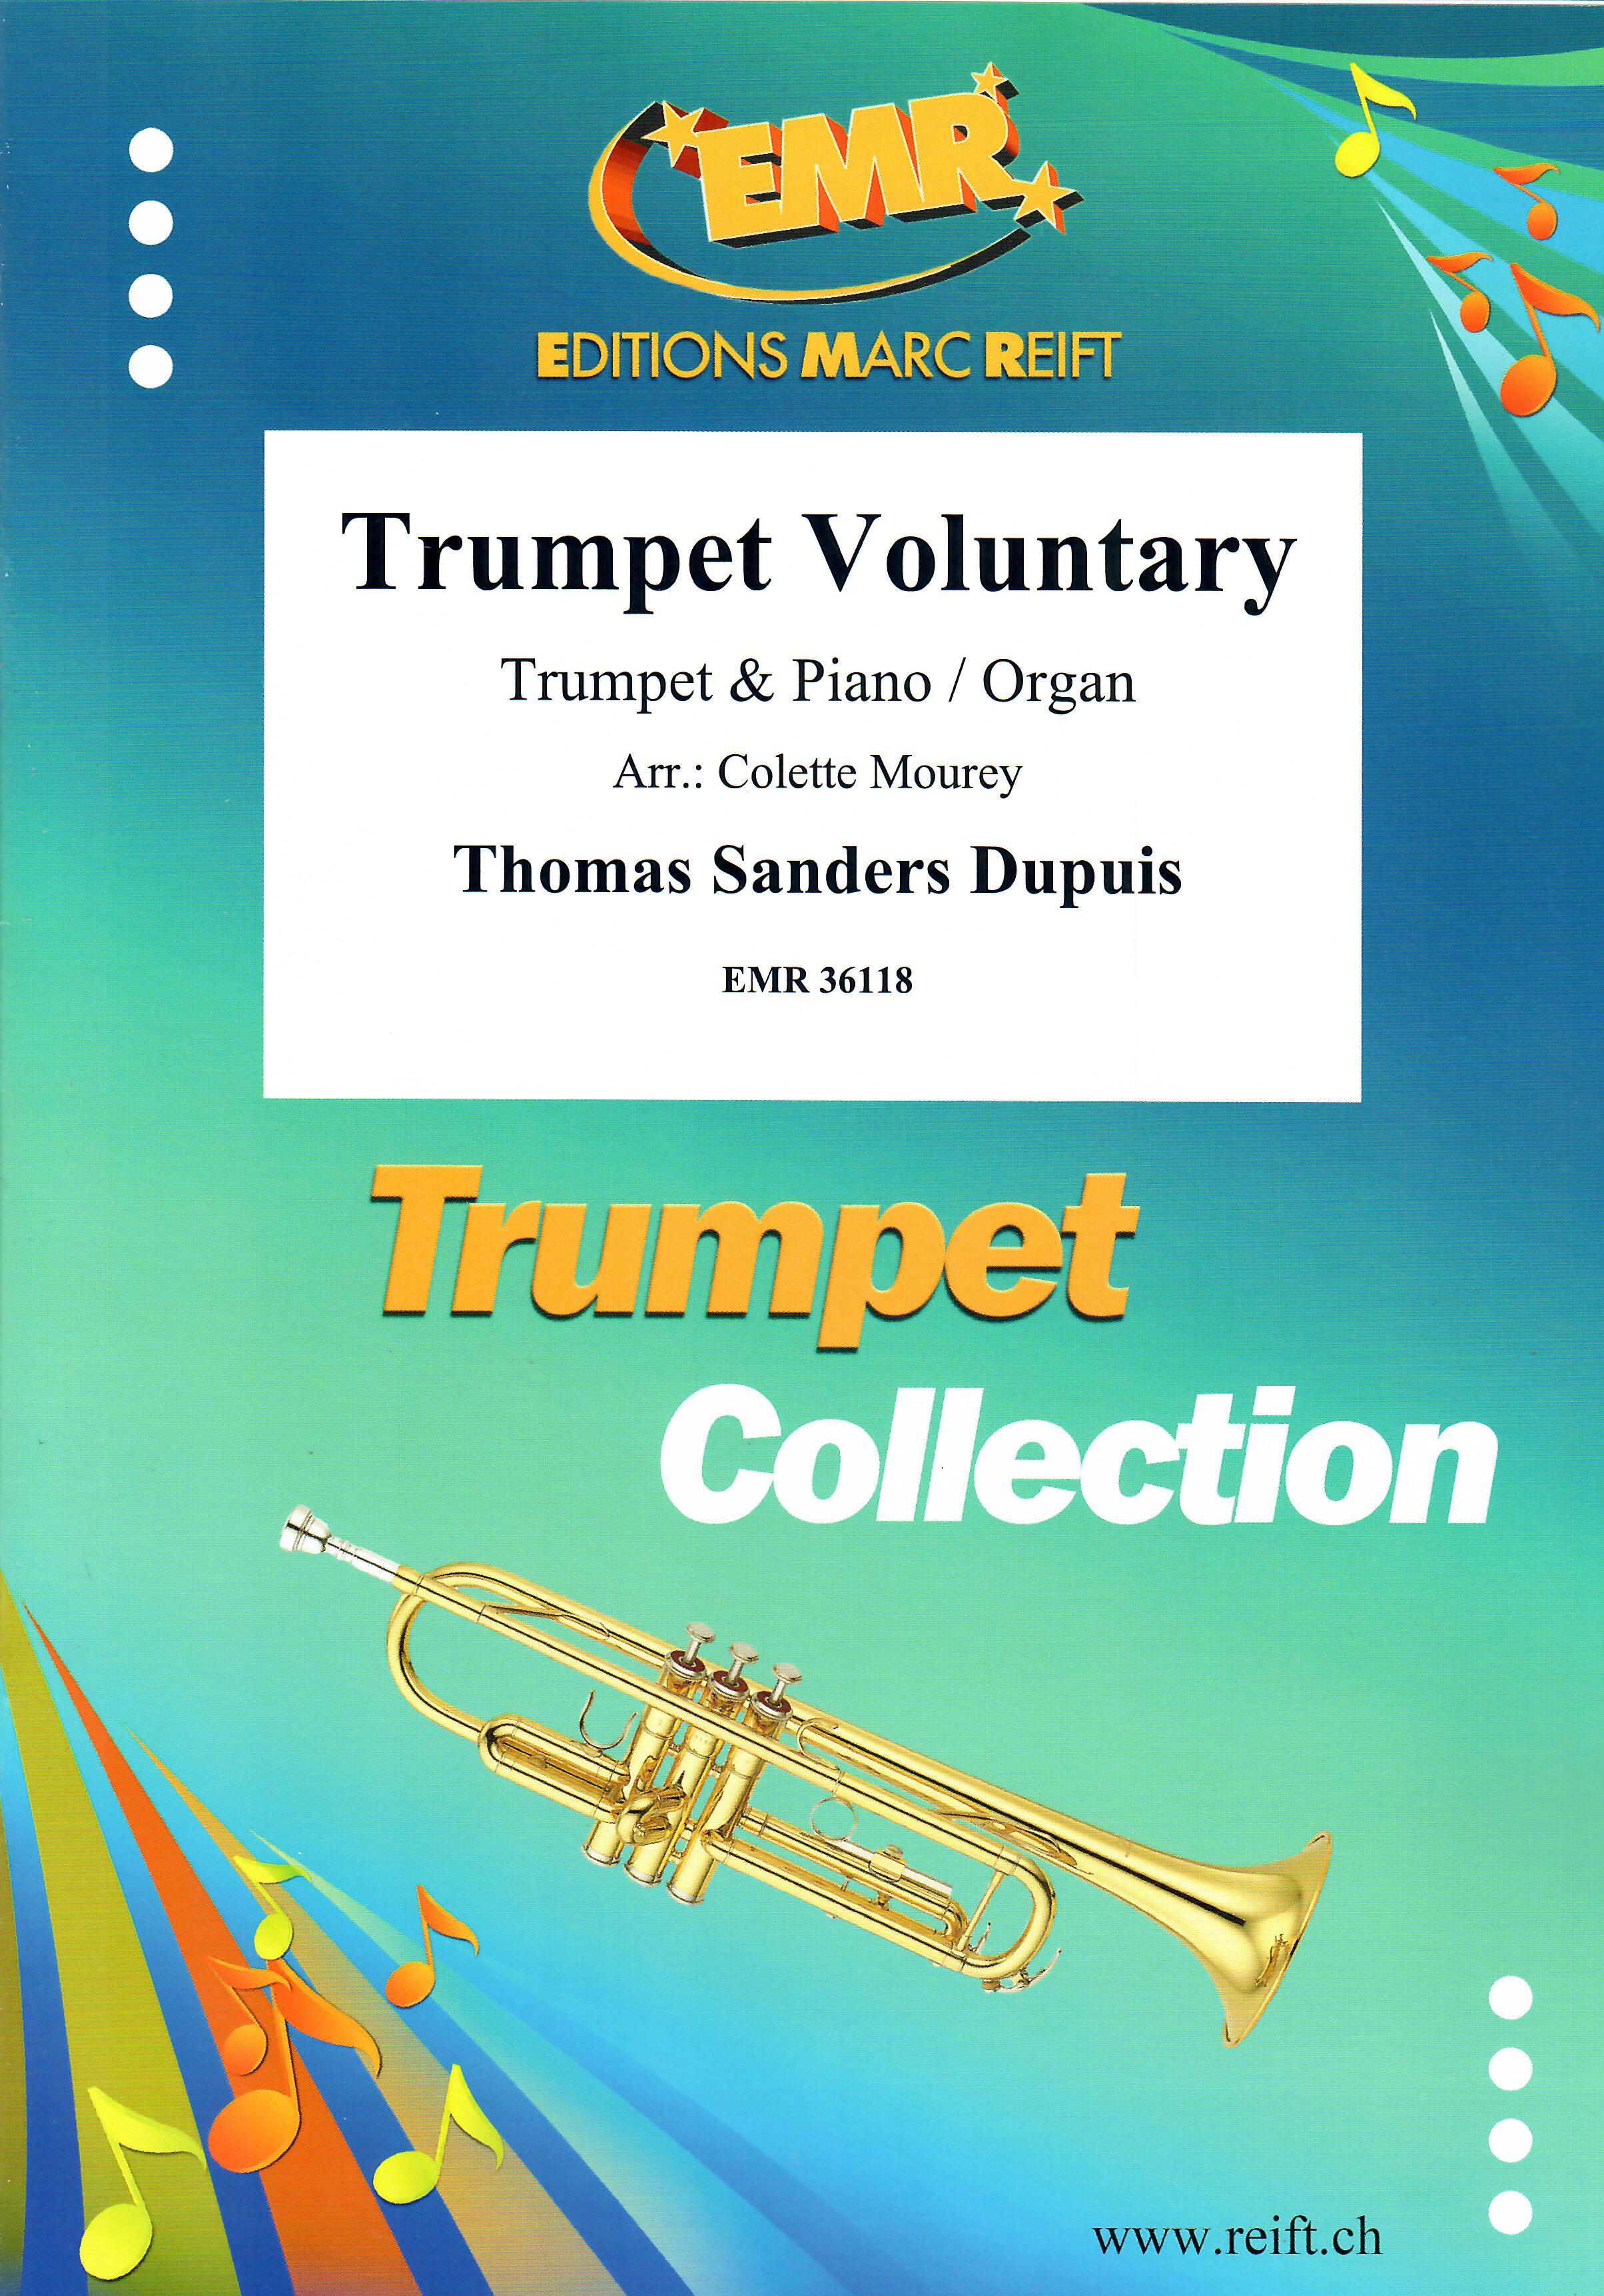 TRUMPET VOLUNTARY, SOLOS - B♭. Cornet/Trumpet with Piano